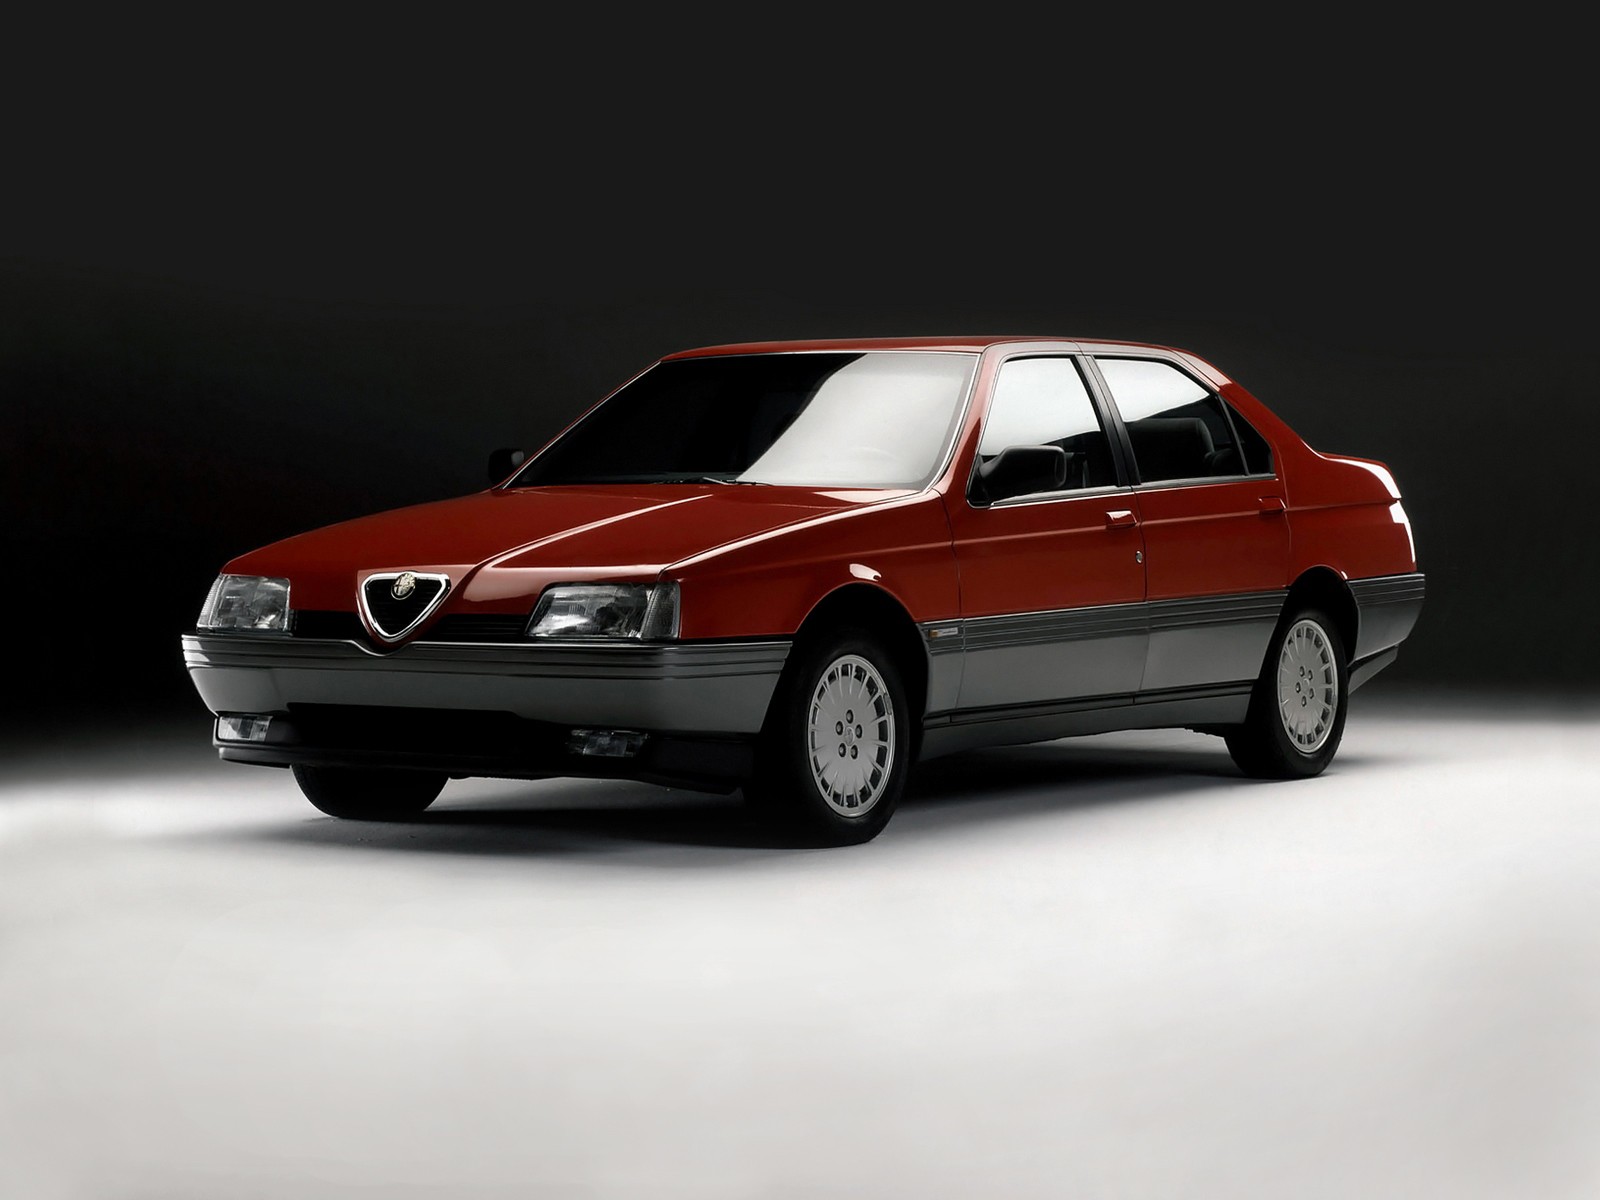 Alfa Romeo 164 - බොහෝ ආකාරවලින් ලස්සනයි